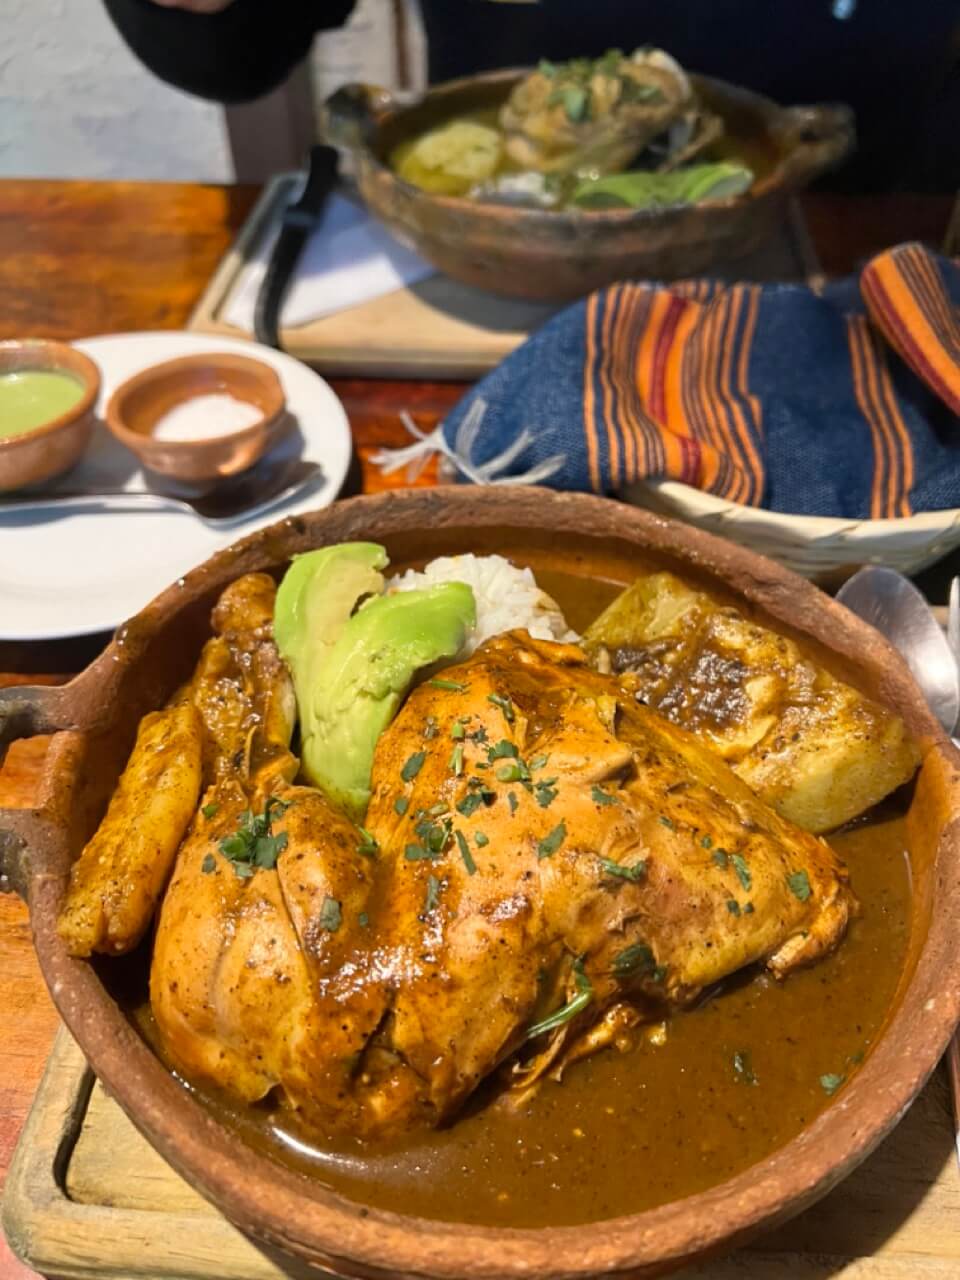 Pepian a traditional dish in Guatemala